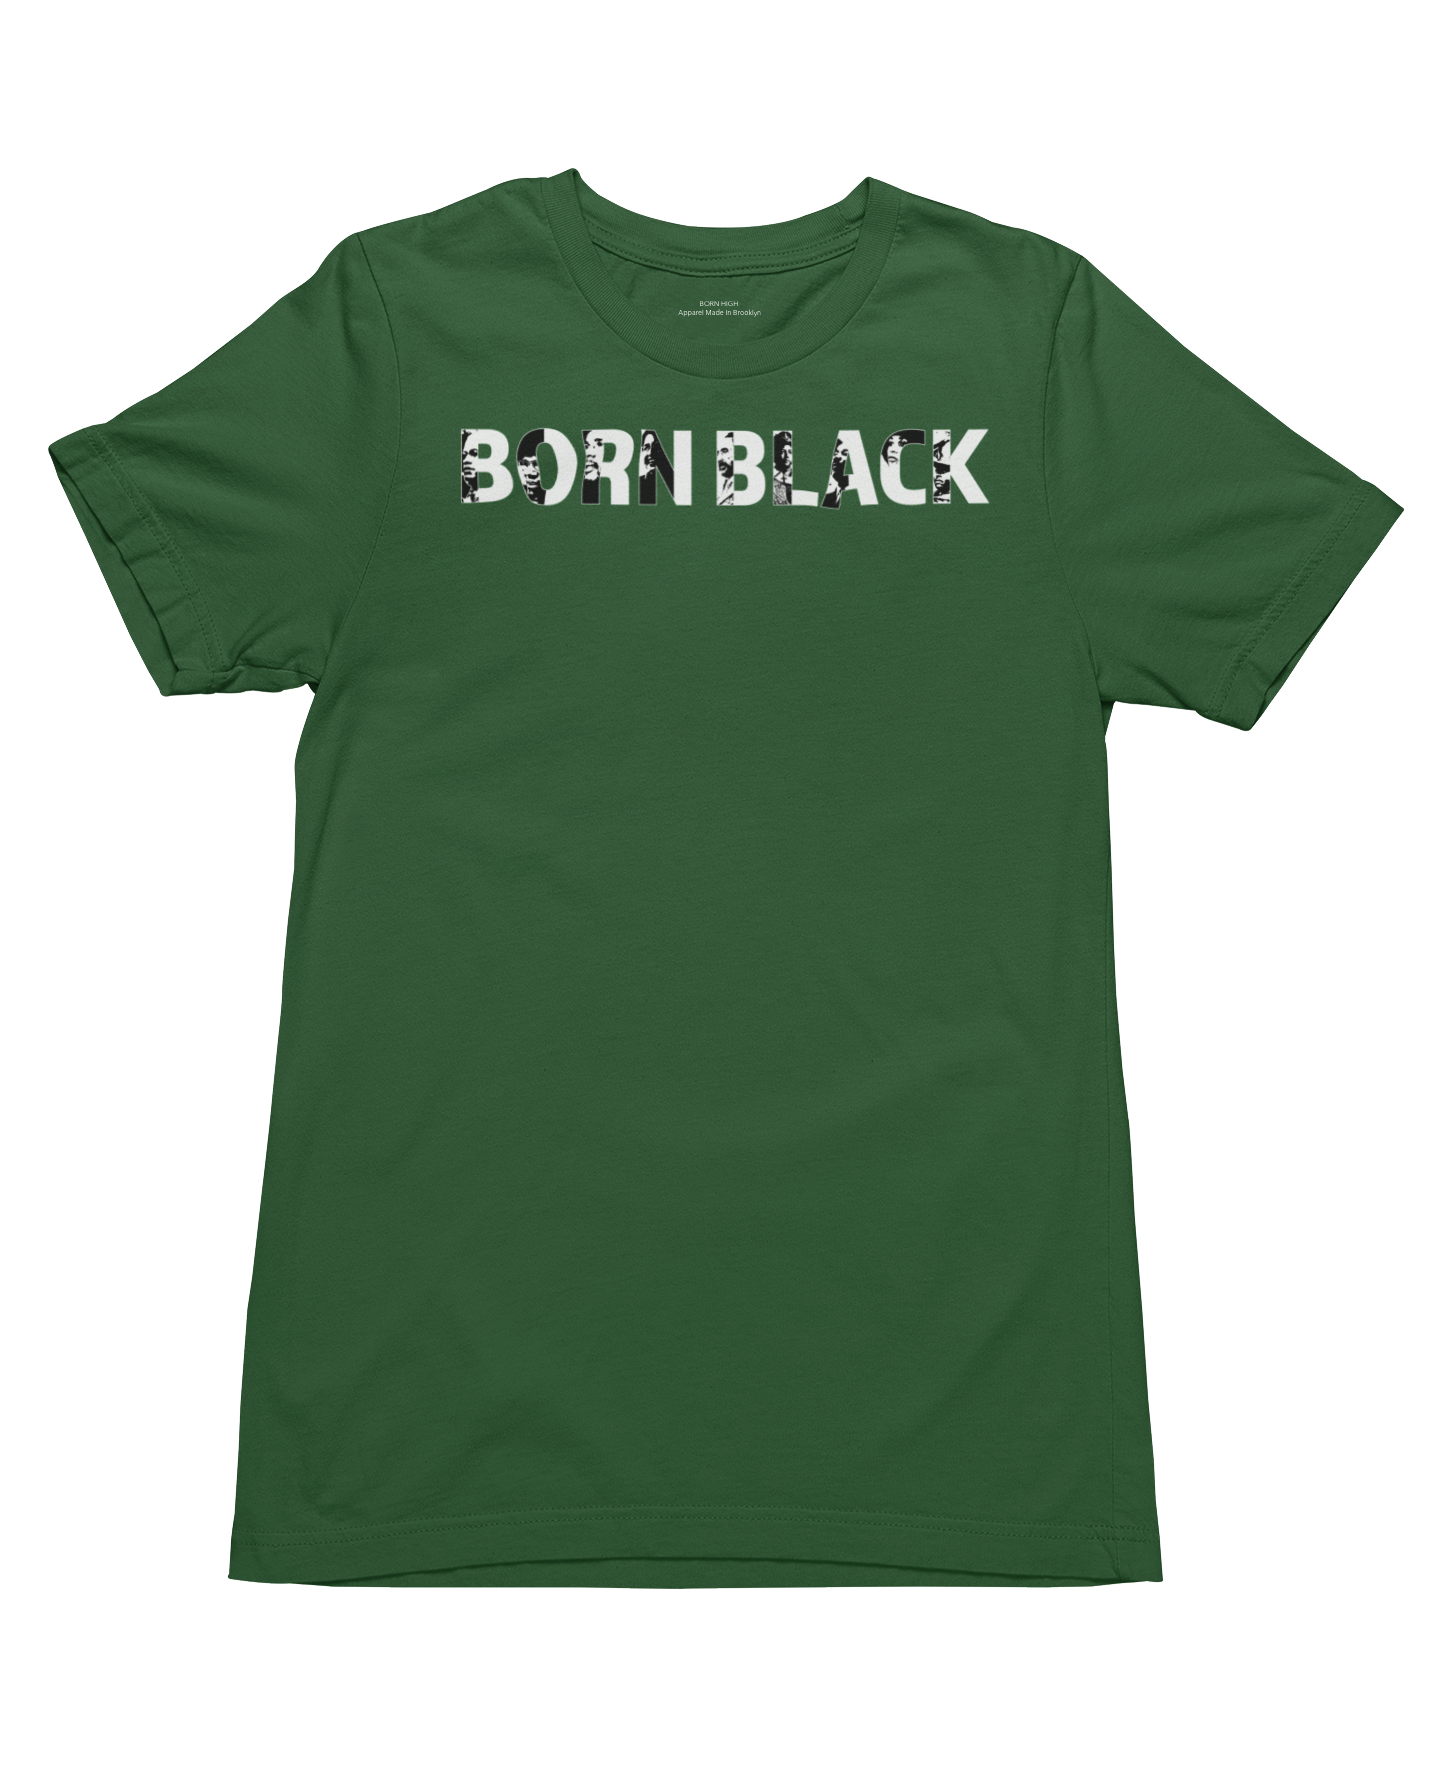 Born Black T-Shirt Moss Green